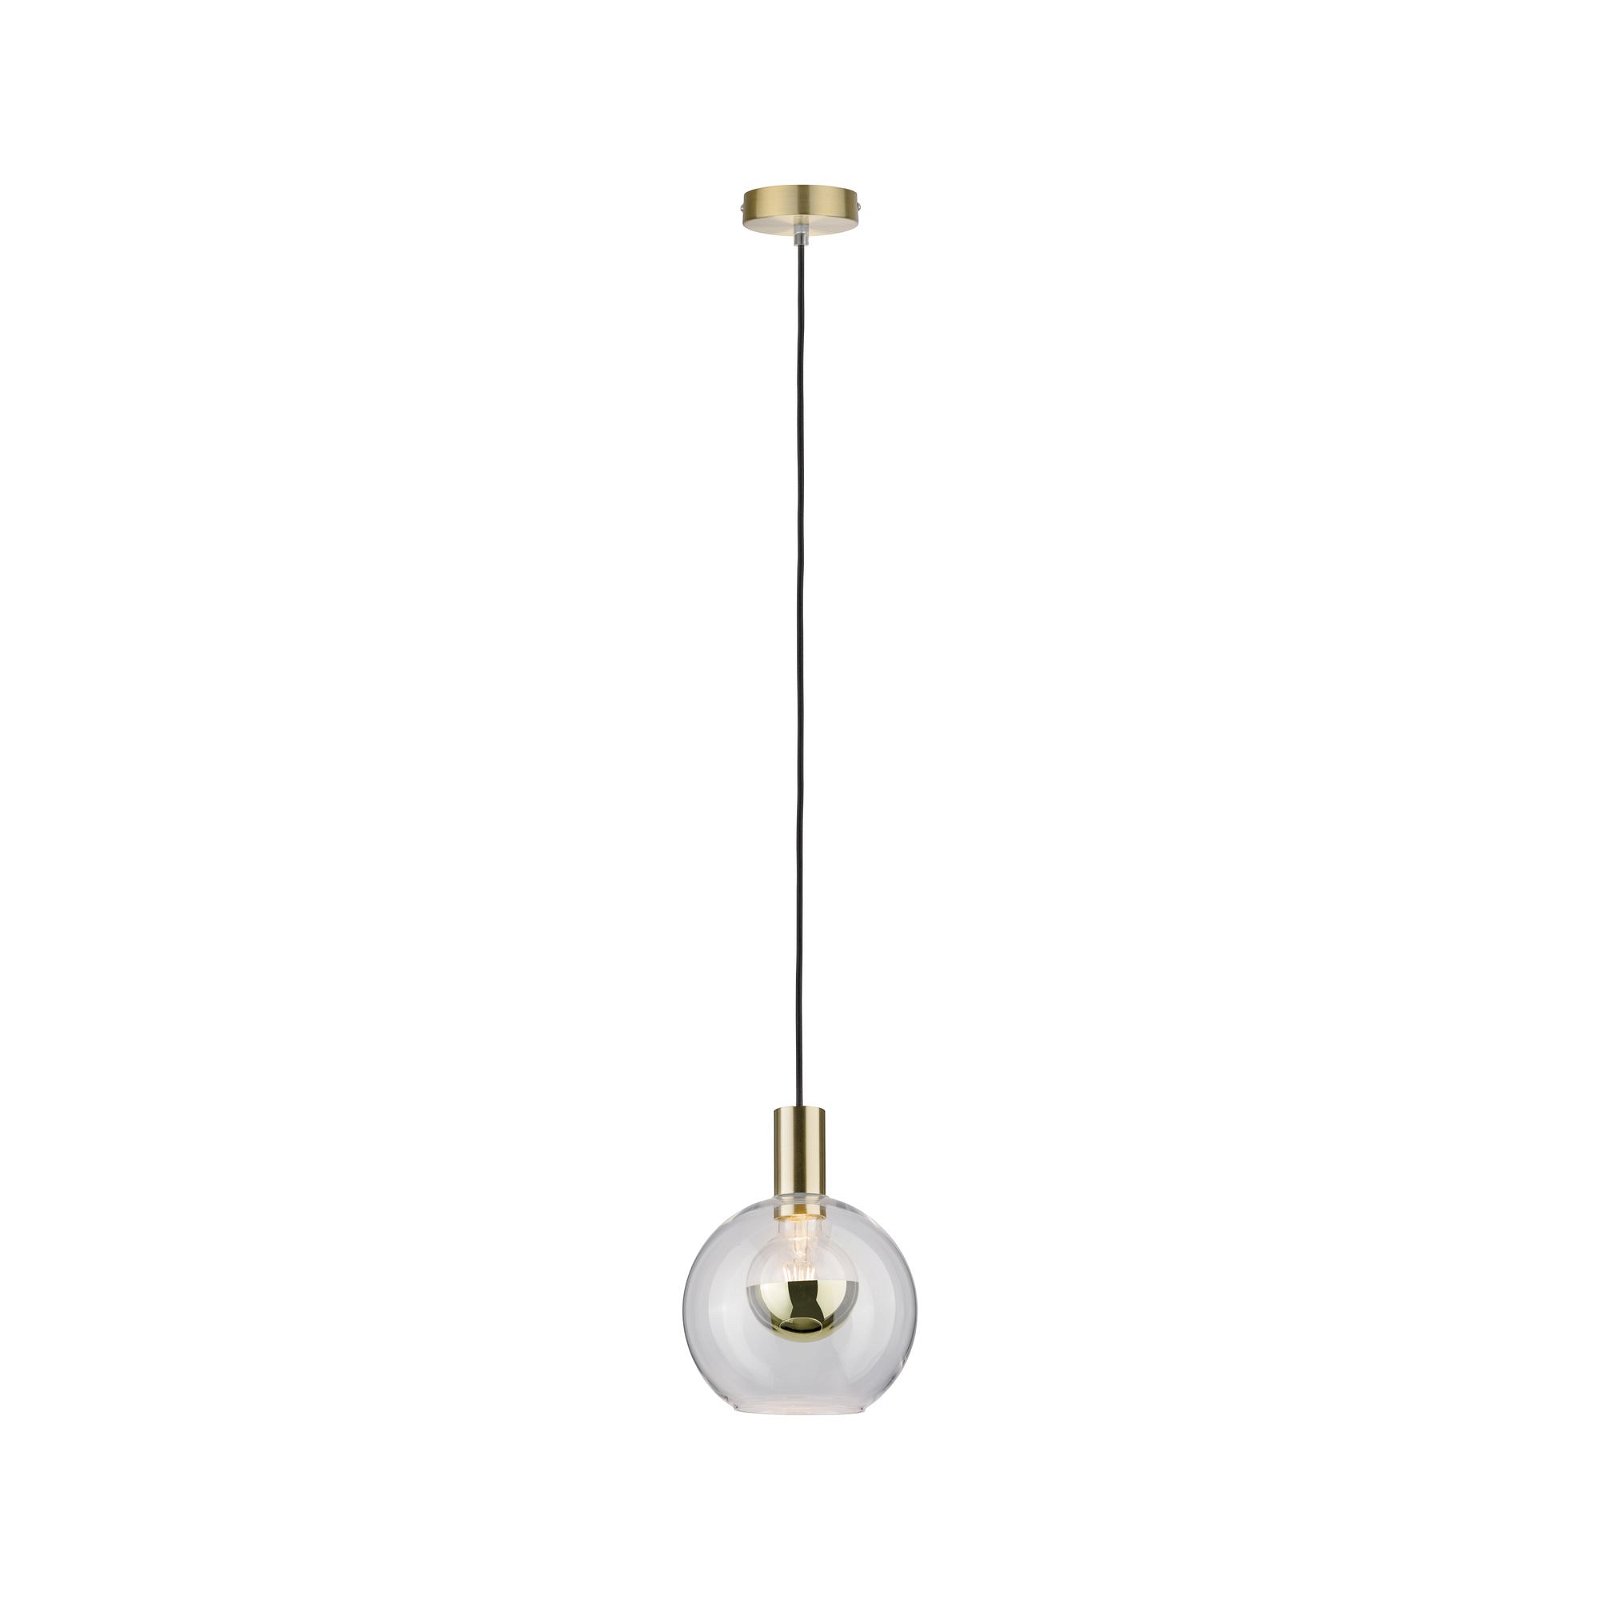 Neordic Hanglamp Esben E27 max. 20W Helder/Messing geborsteld dimbaar Glas/Metaal